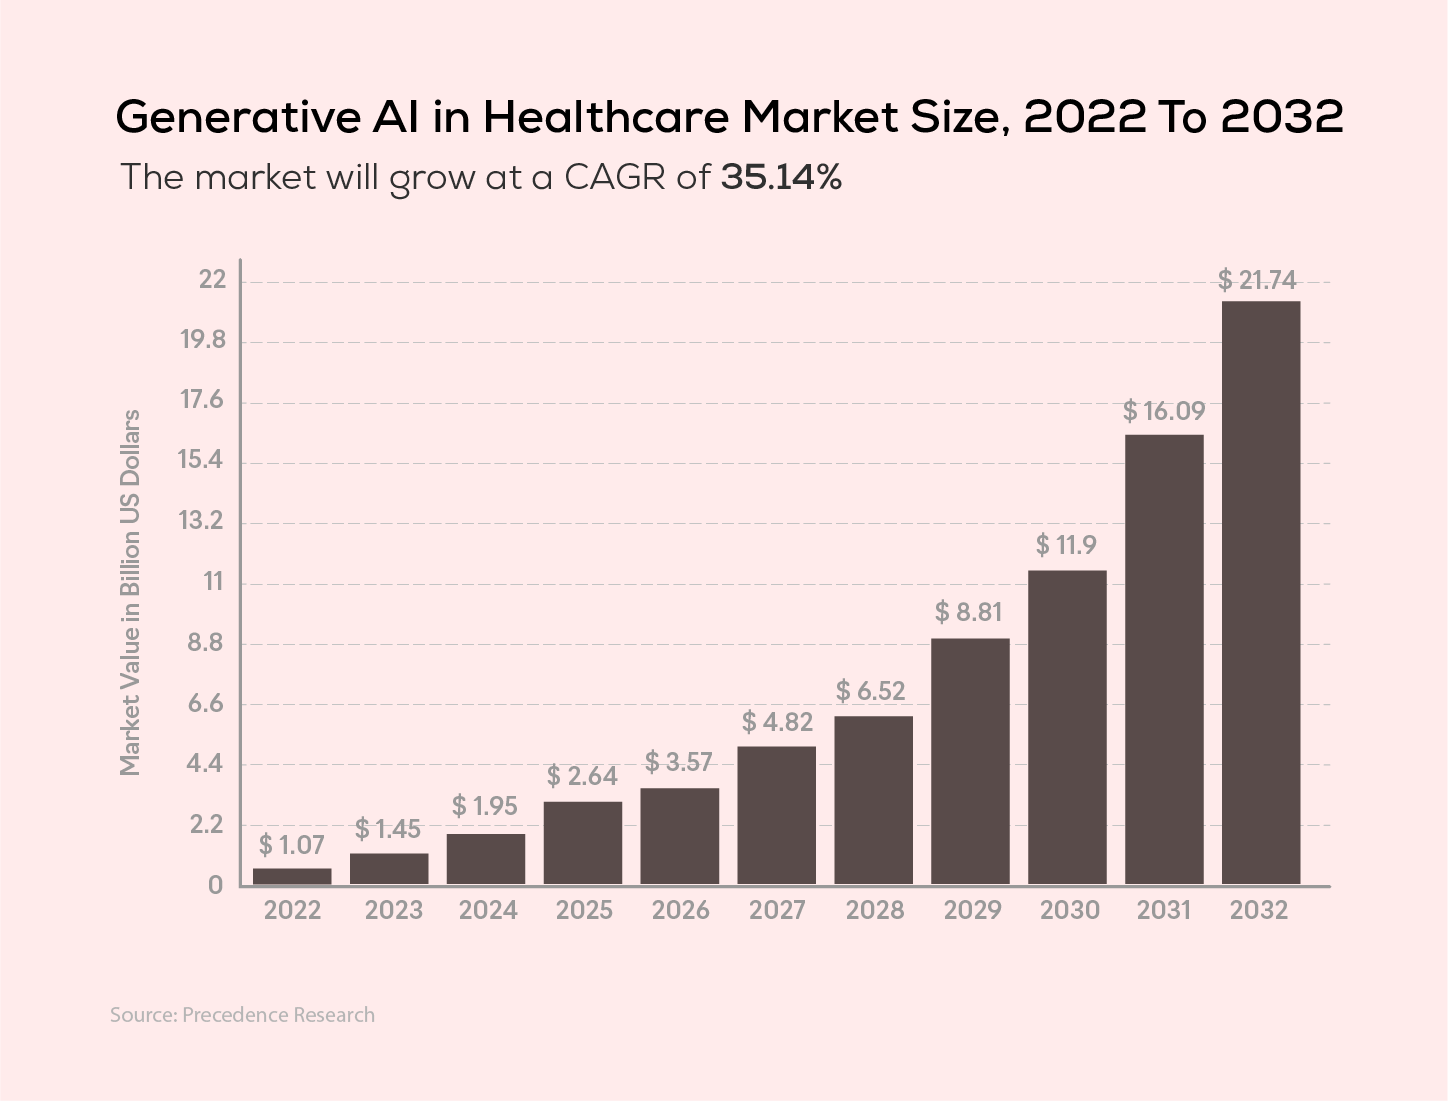 Generative AI in Healthcare Market Size 2022 to 2023